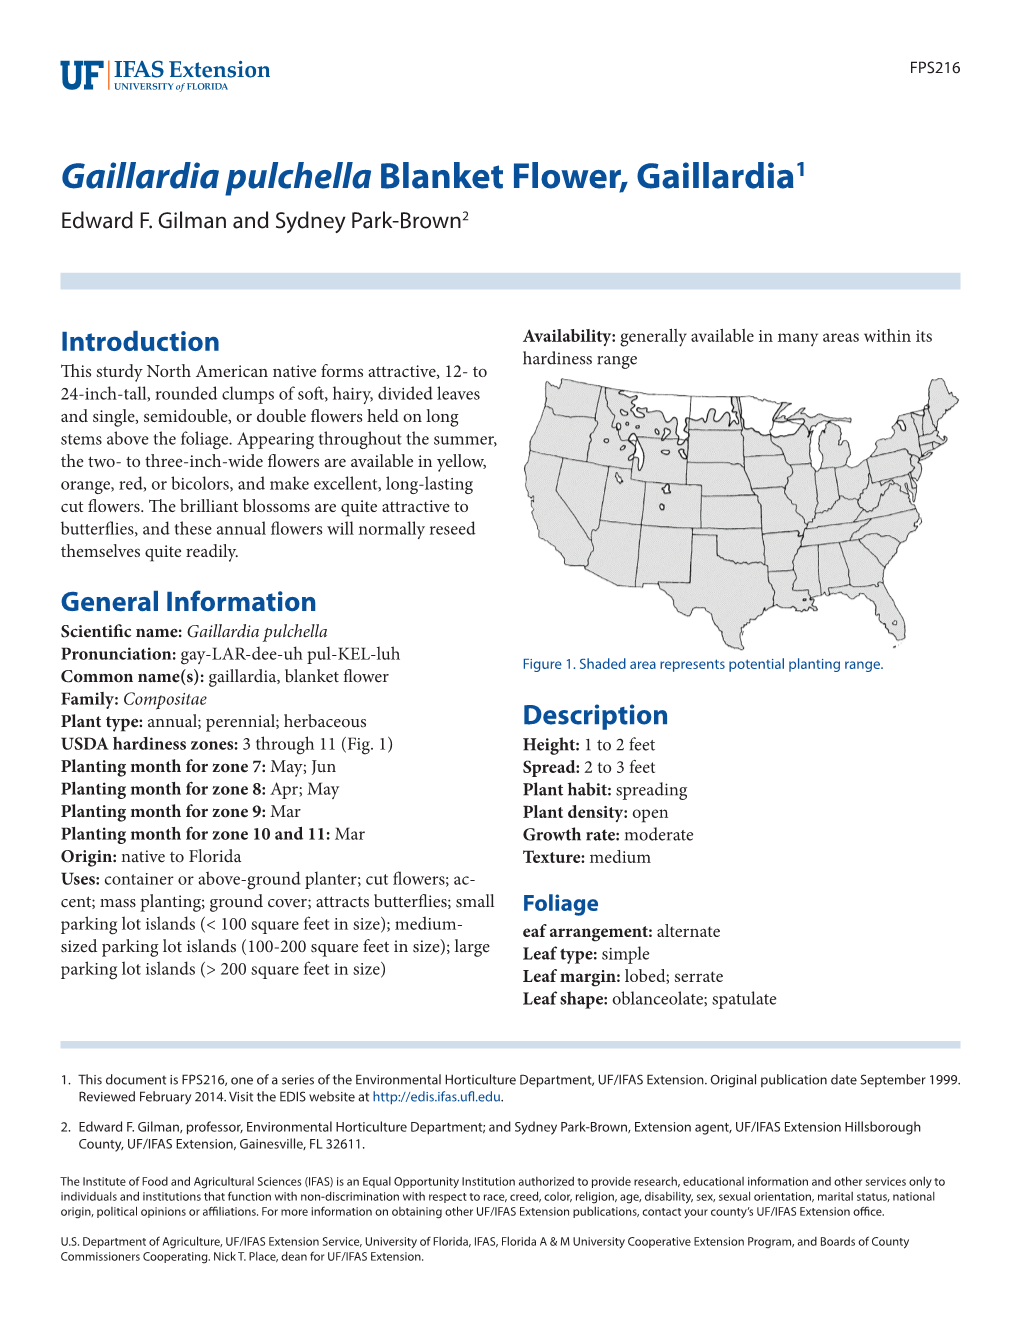 Gaillardia Pulchella Blanket Flower, Gaillardia1 Edward F